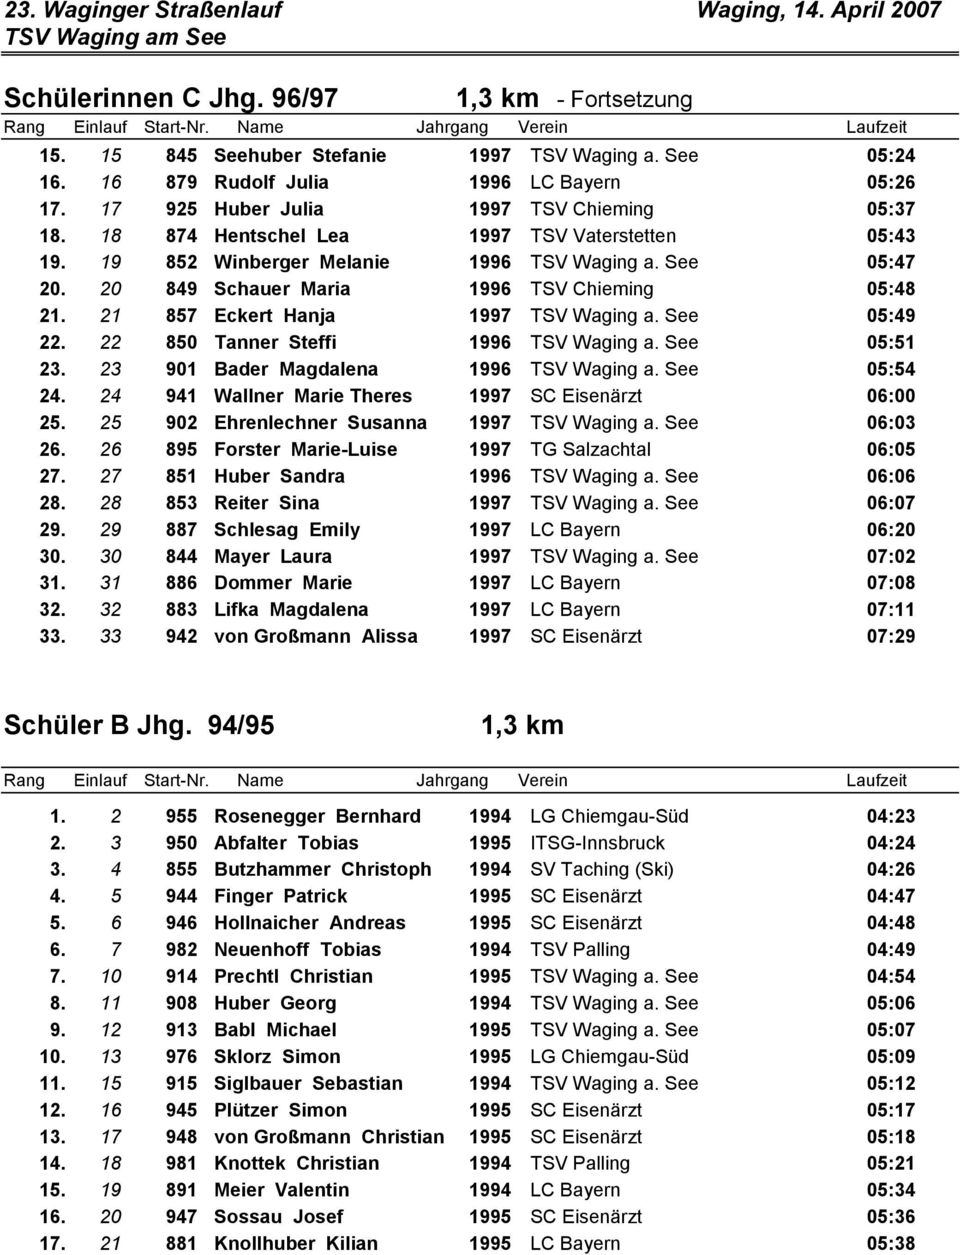 See 05:49 22. 22 850 Tanner Steffi 1996 TSV Waging a. See 05:51 23. 23 901 Bader Magdalena 1996 TSV Waging a. See 05:54 24. 24 941 Wallner Marie Theres 1997 SC Eisenärzt 06:00 25.